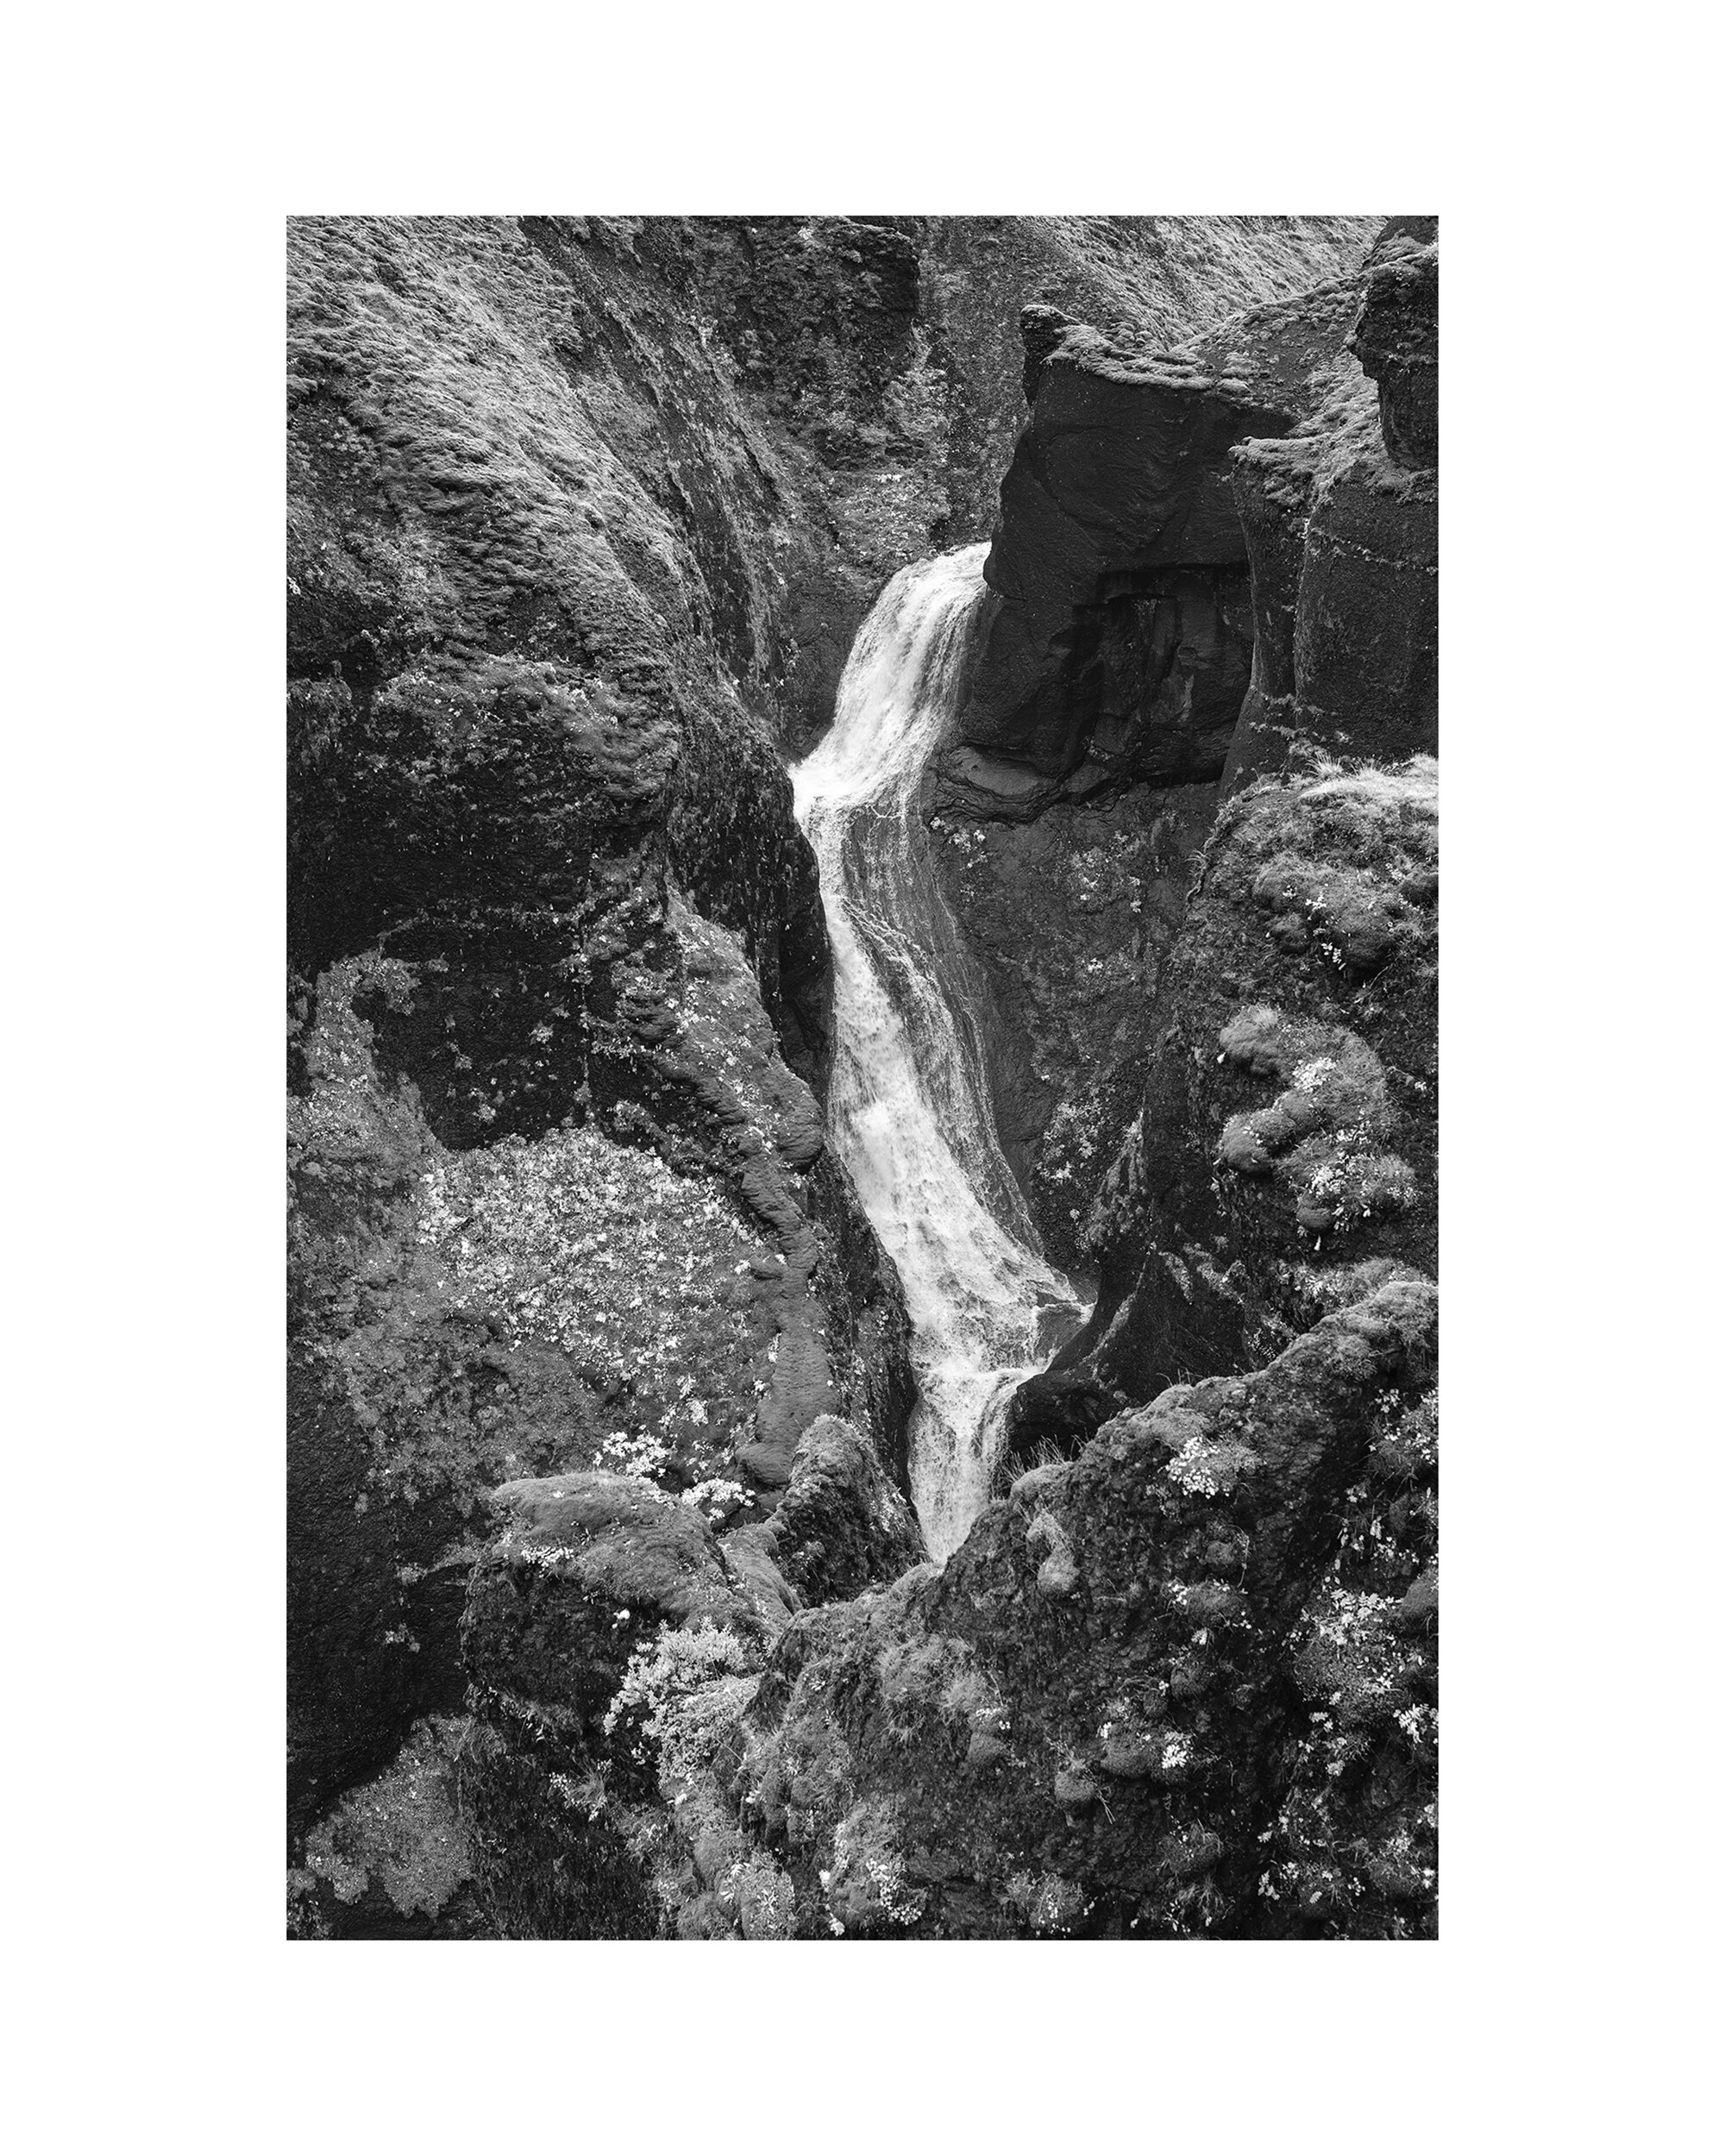   Waterfall (Fjadrargljufur, Iceland) , 2019 